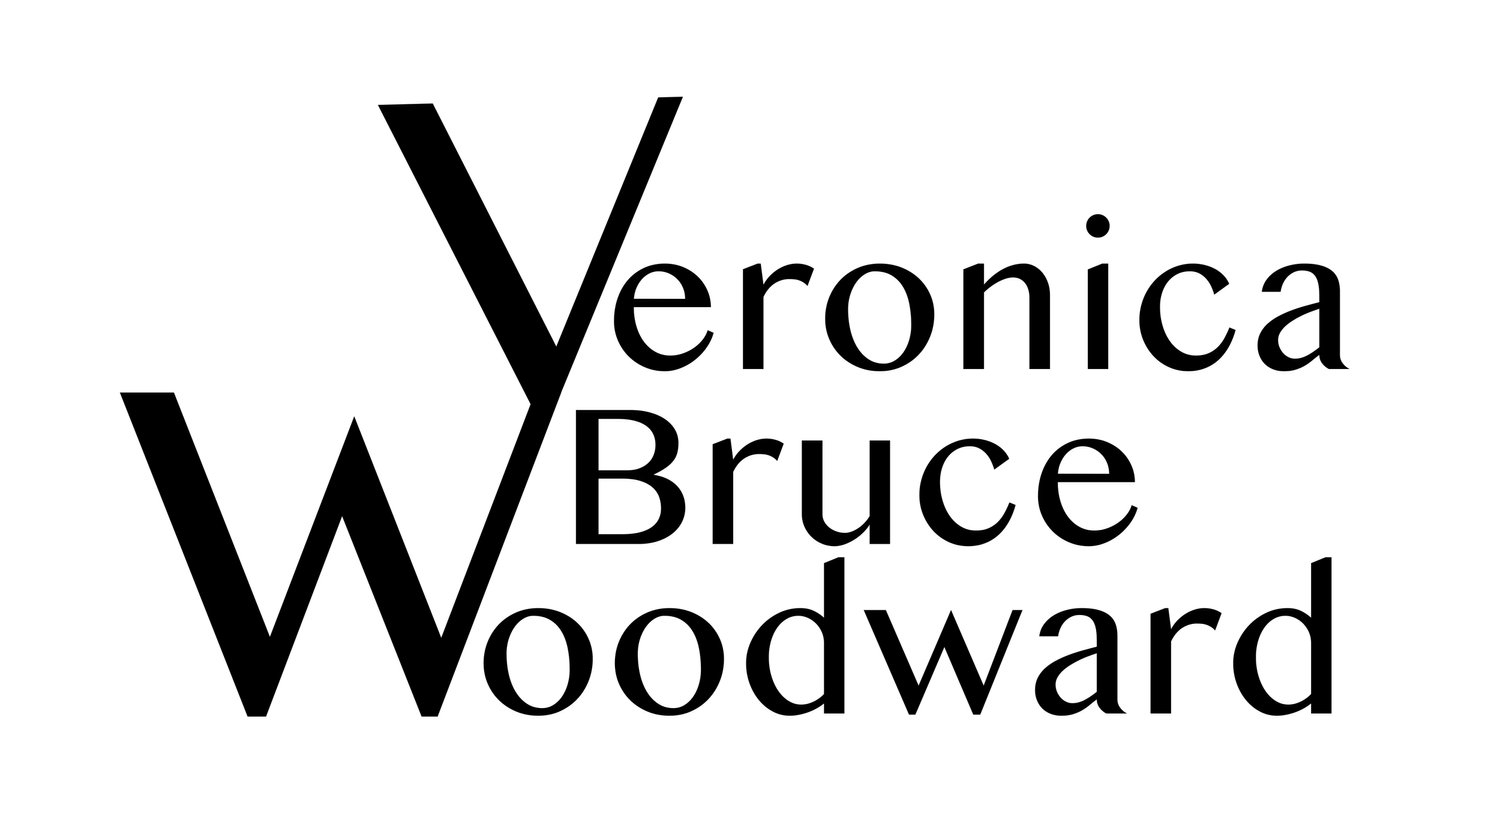 Veronica Bruce Woodward